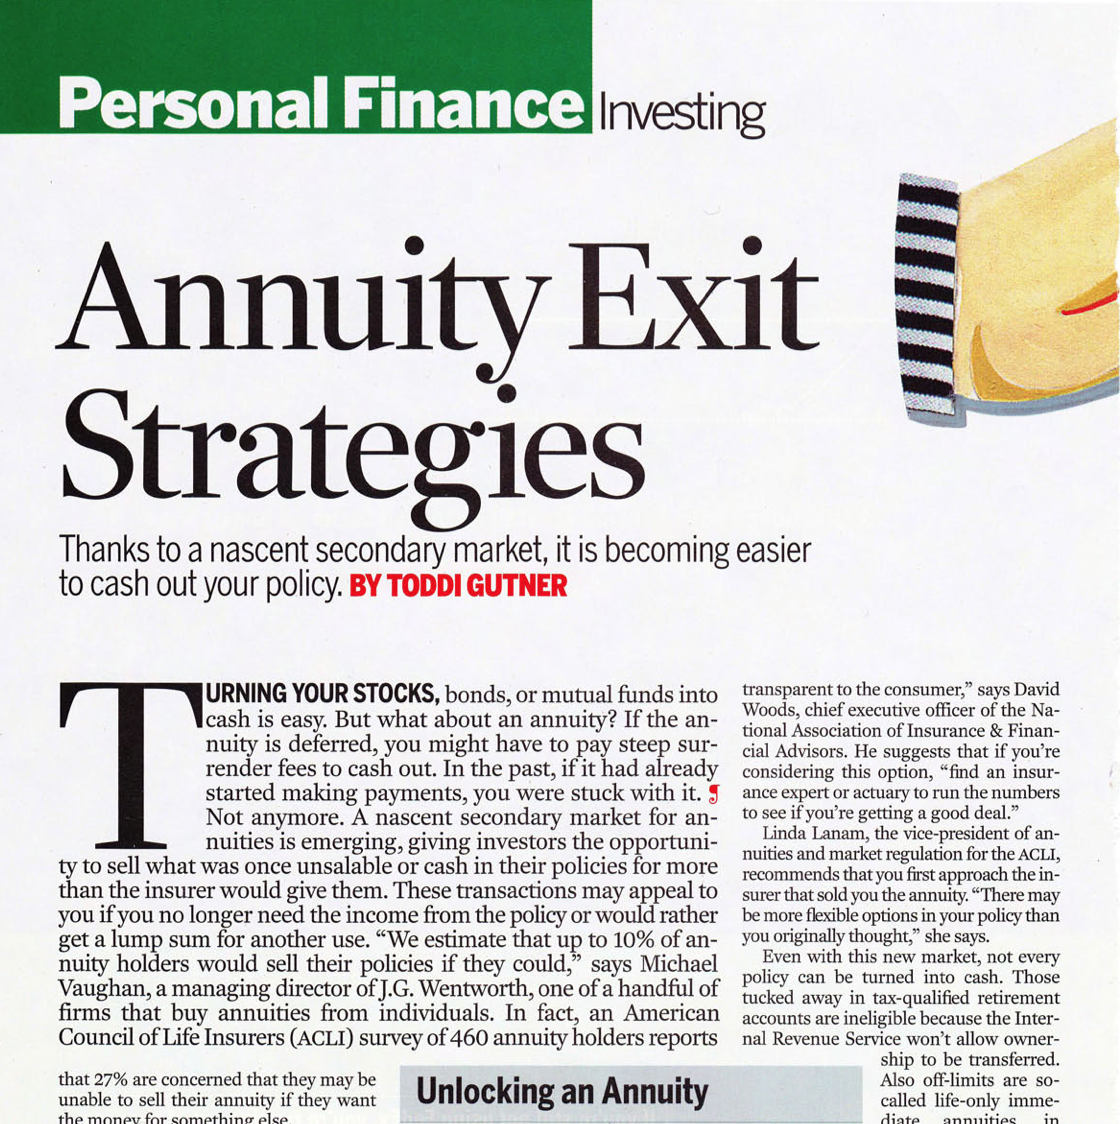 Annuity exit strategies